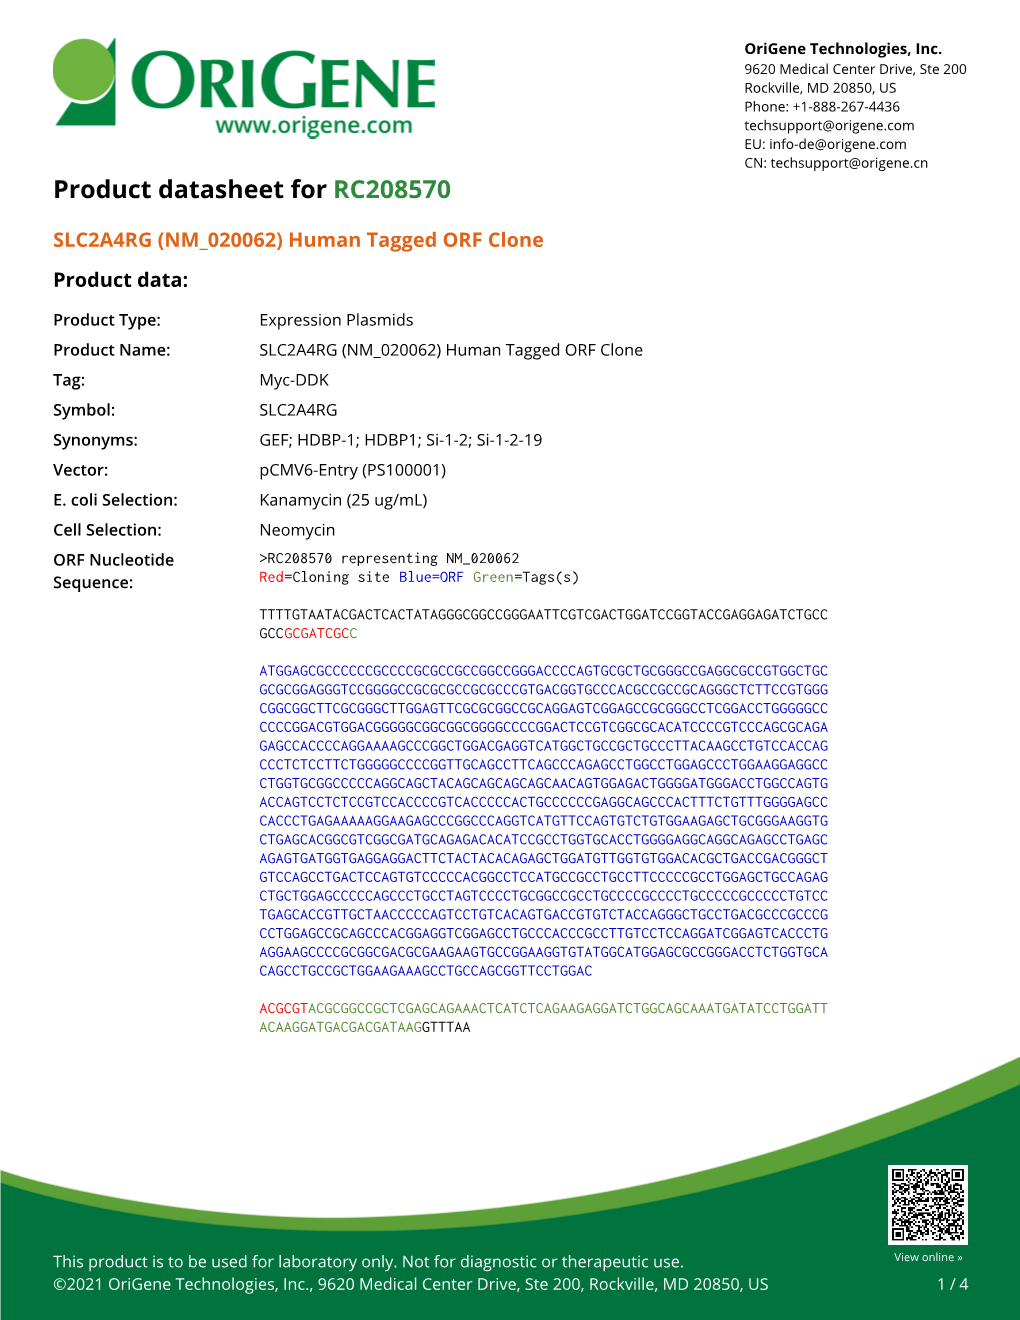 SLC2A4RG (NM 020062) Human Tagged ORF Clone – RC208570